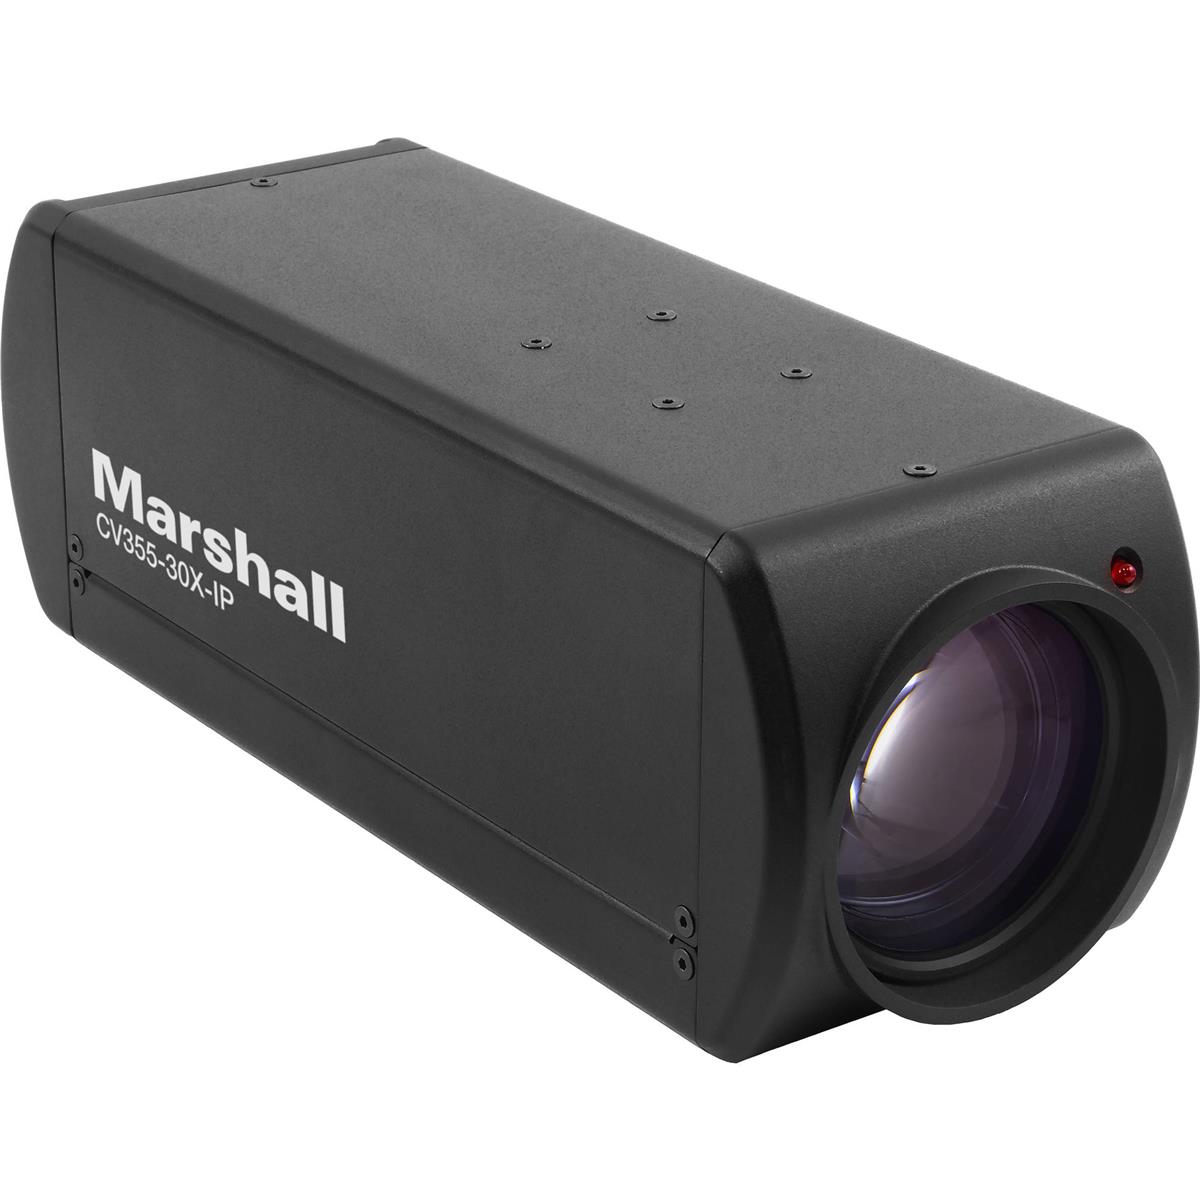 Image of Marshall Electronics CV355-30X-IP 8.5MP Full HD 30X Optical Zoom IP Camera